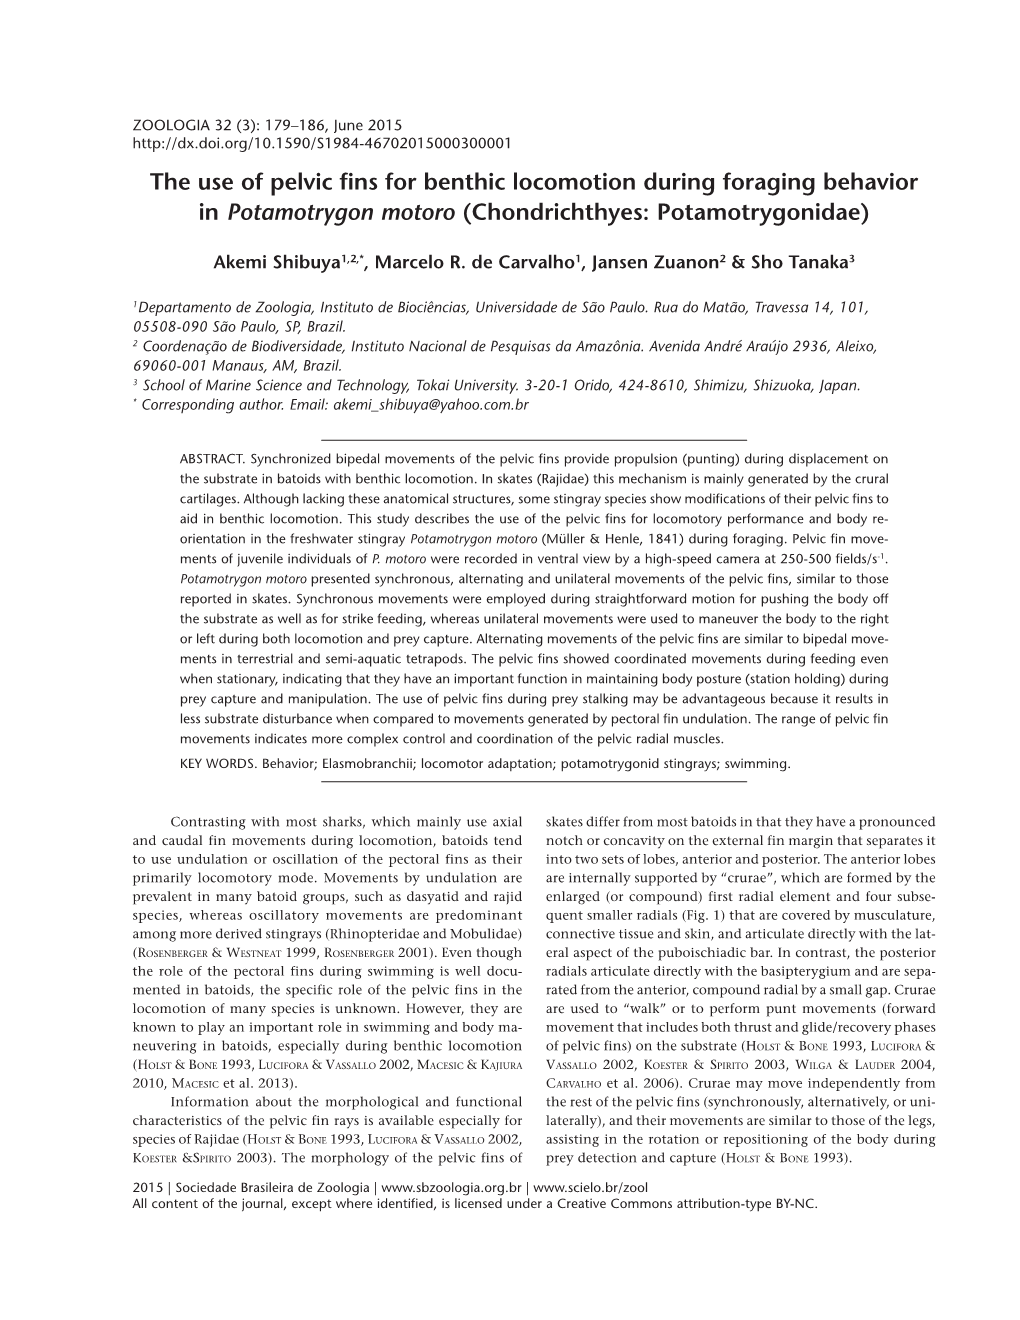 The Use of Pelvic Fins for Benthic Locomotion During Foraging Behavior in Potamotrygon Motoro (Chondrichthyes: Potamotrygonidae)